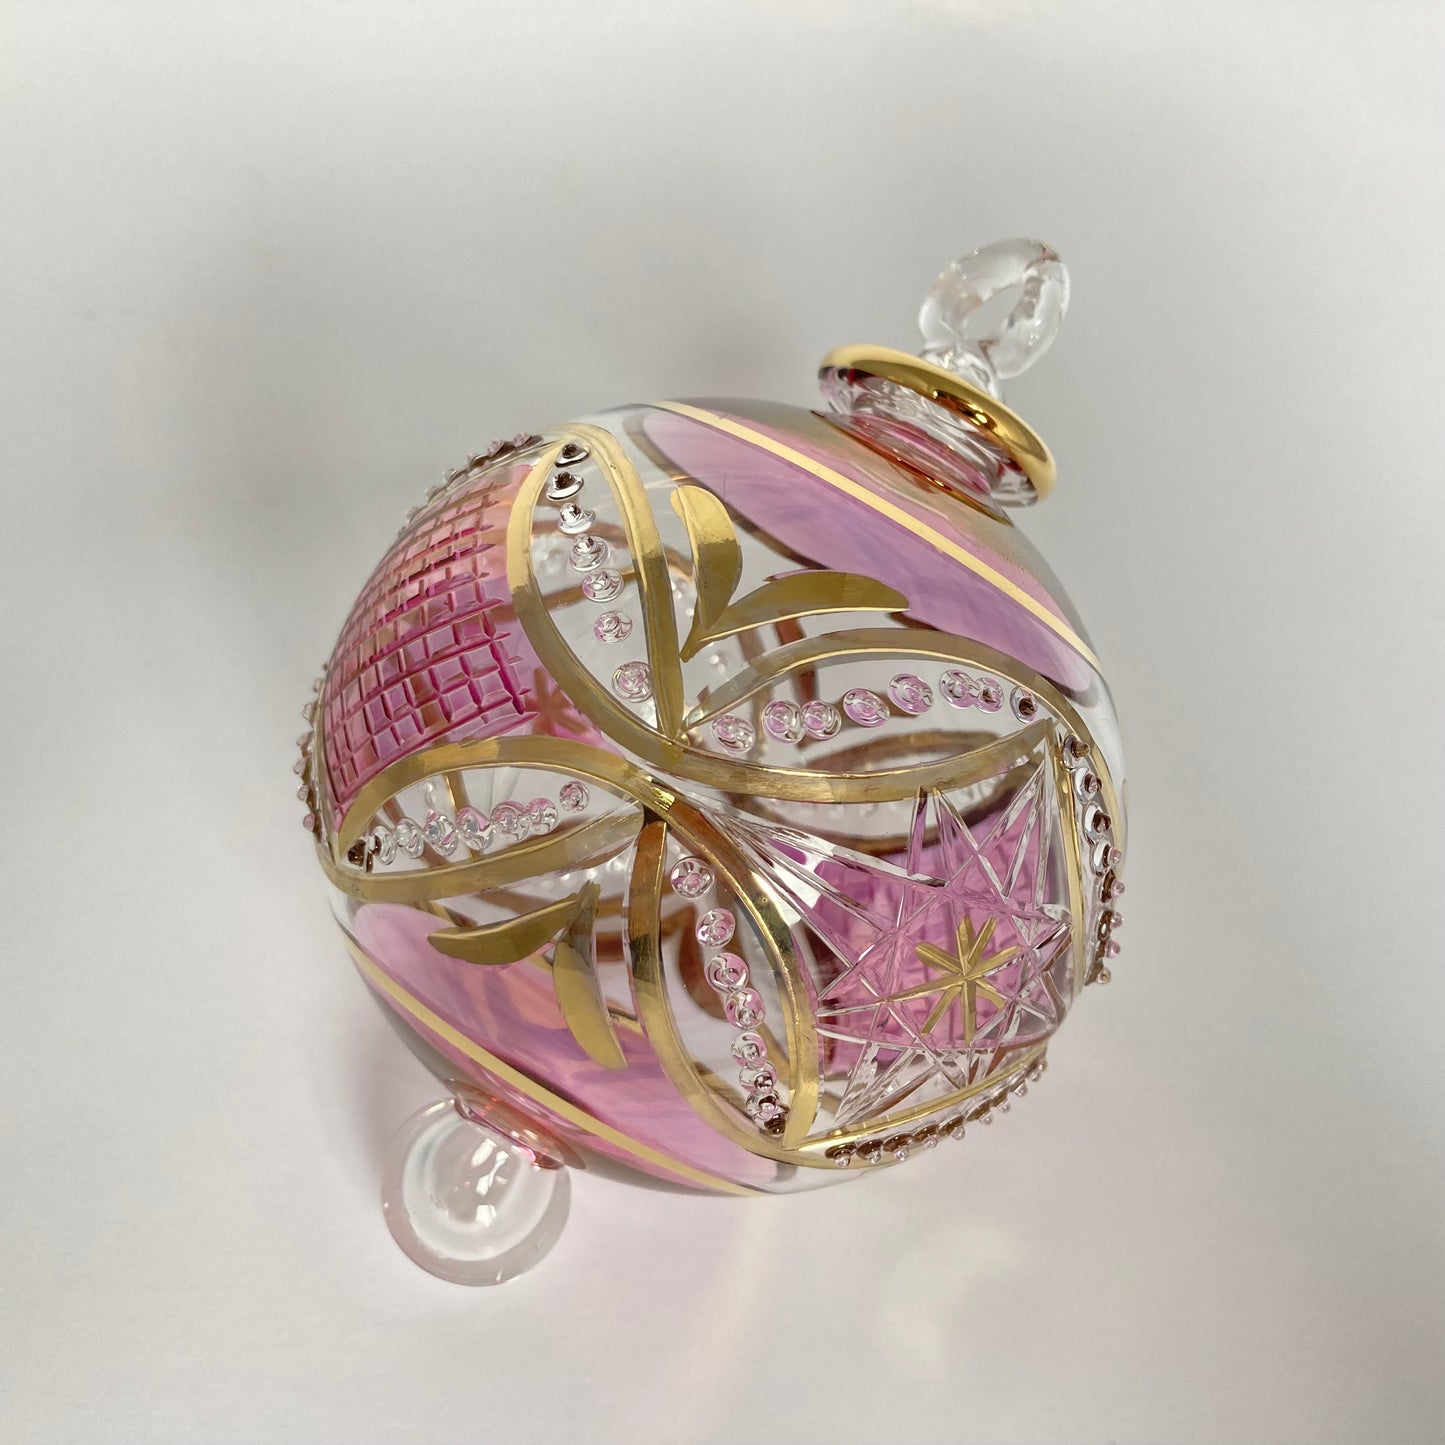 Blown Glass Ornament - Pink Carousel